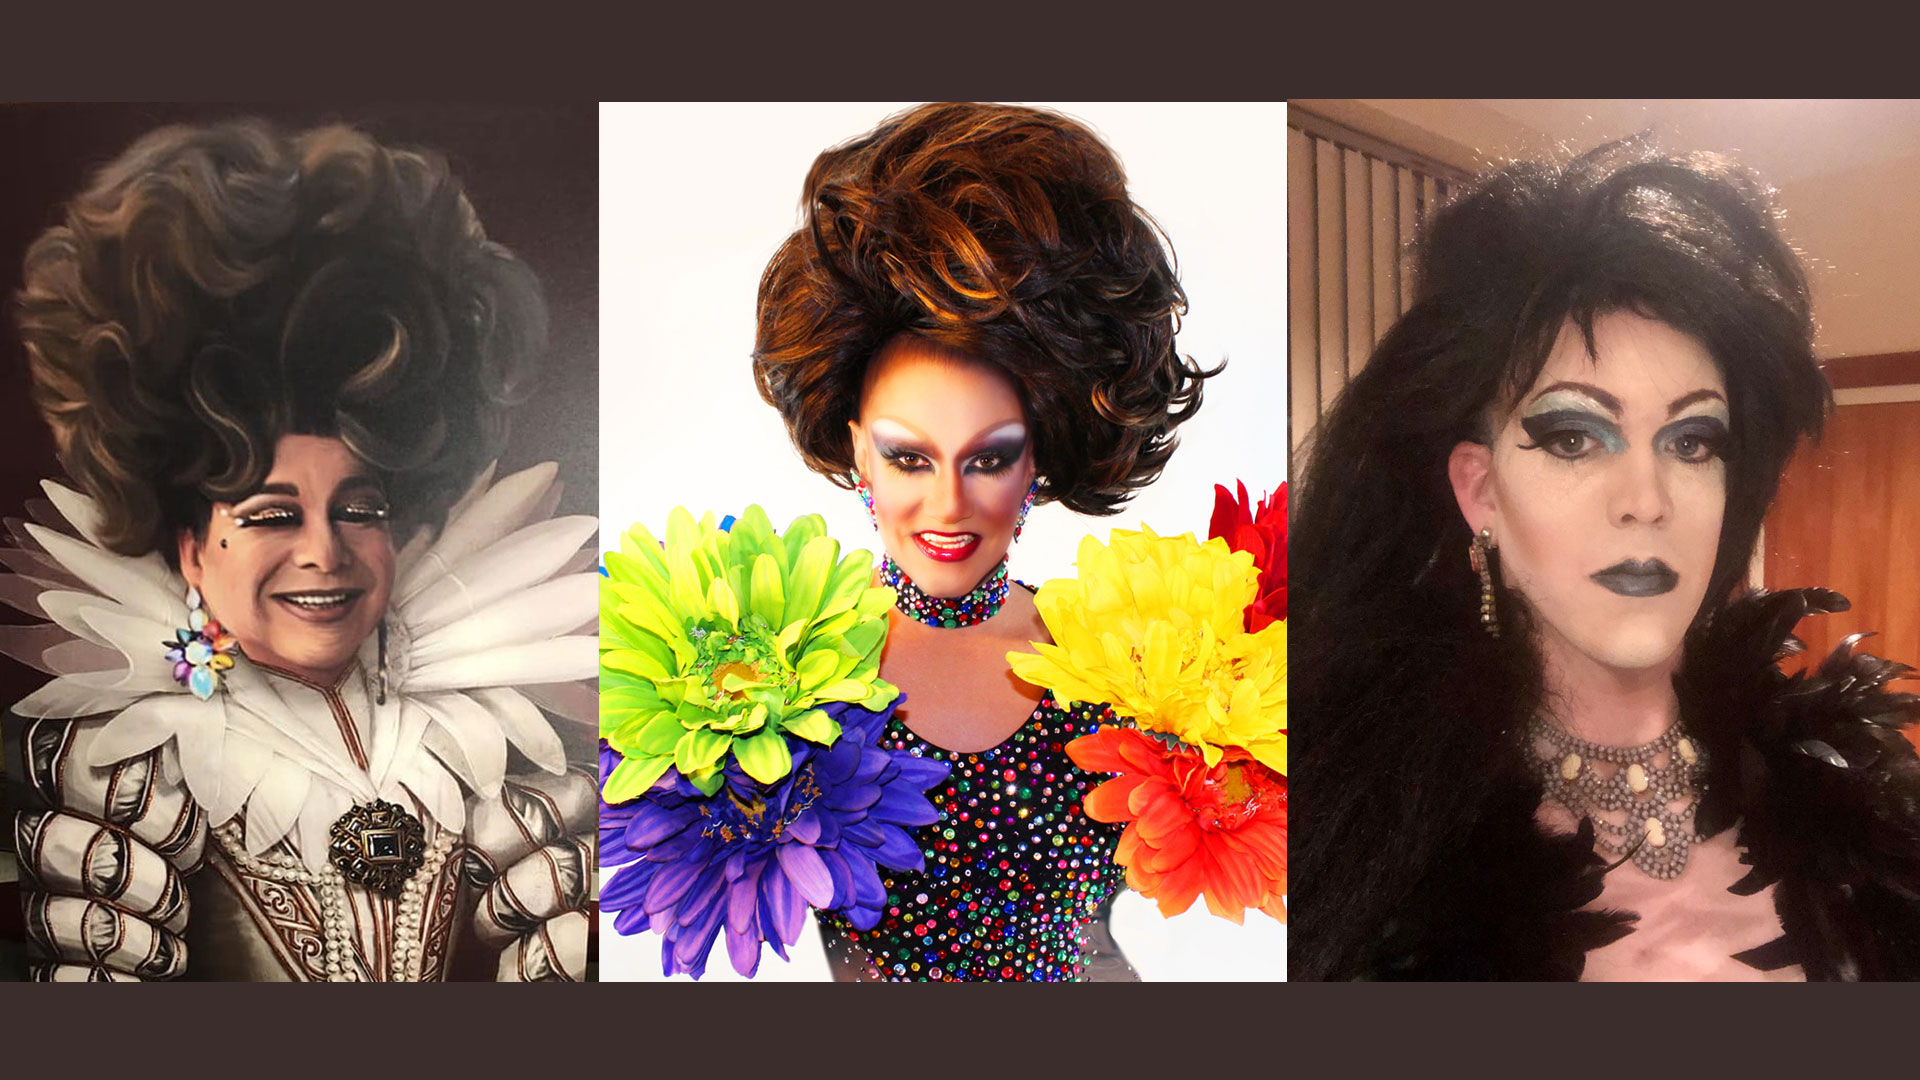 three drag queen headshots: renaissance style, carmen miranda style, and goth or hair band style